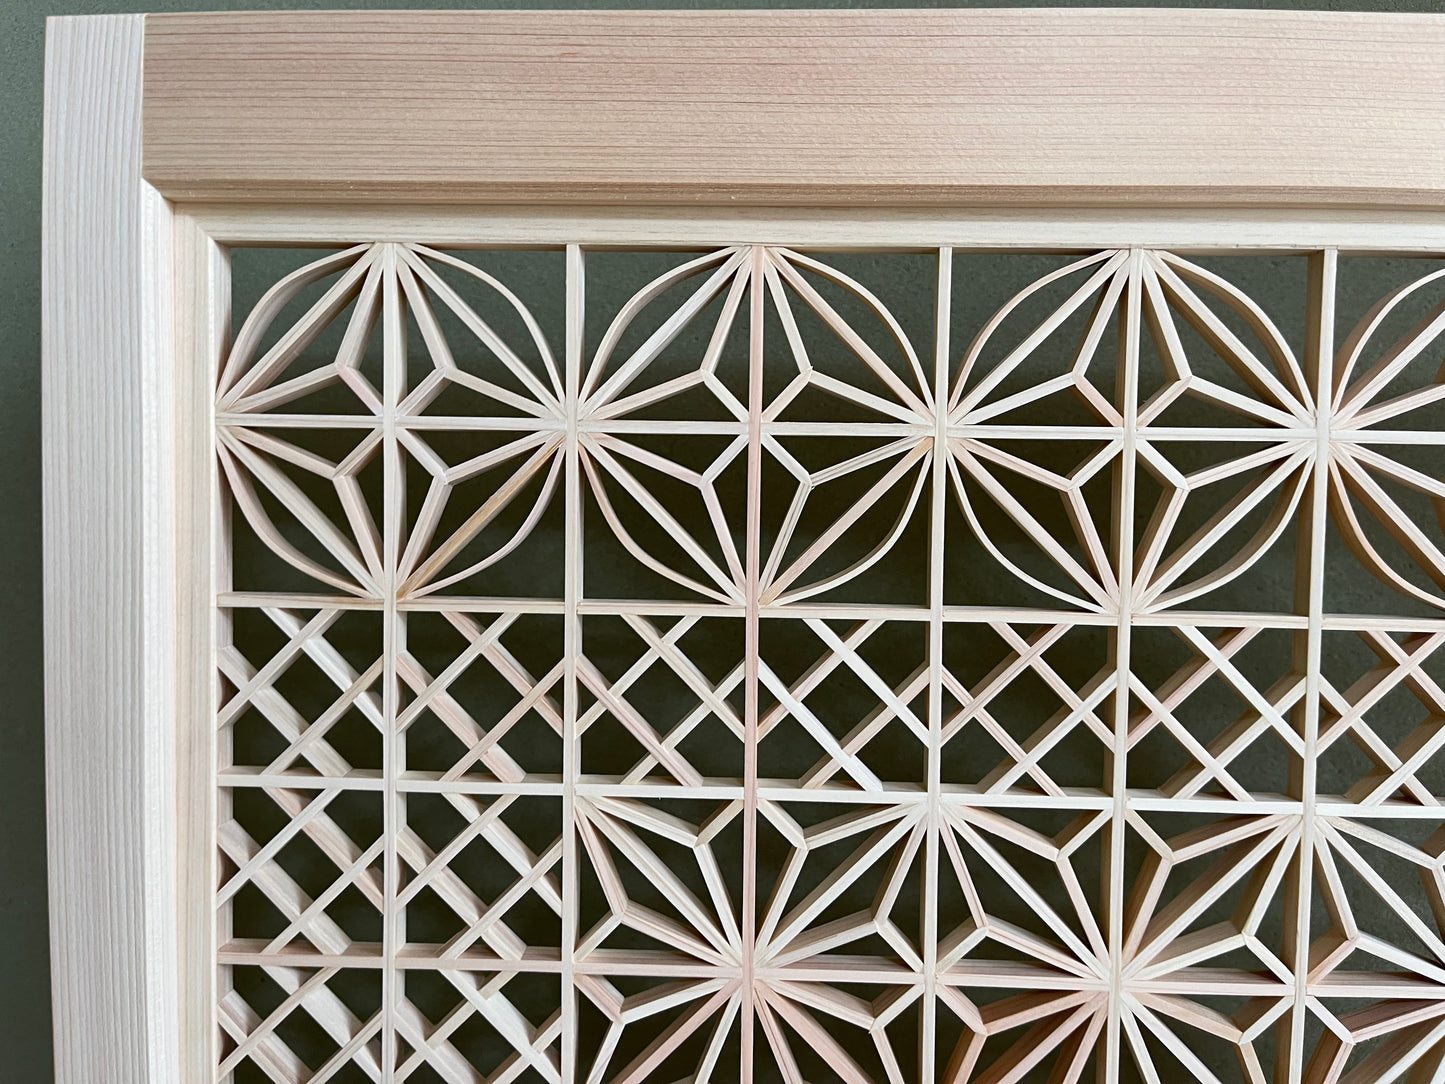 Kumiko work art panel L pattern 6 domestic cypress with dedicated stand